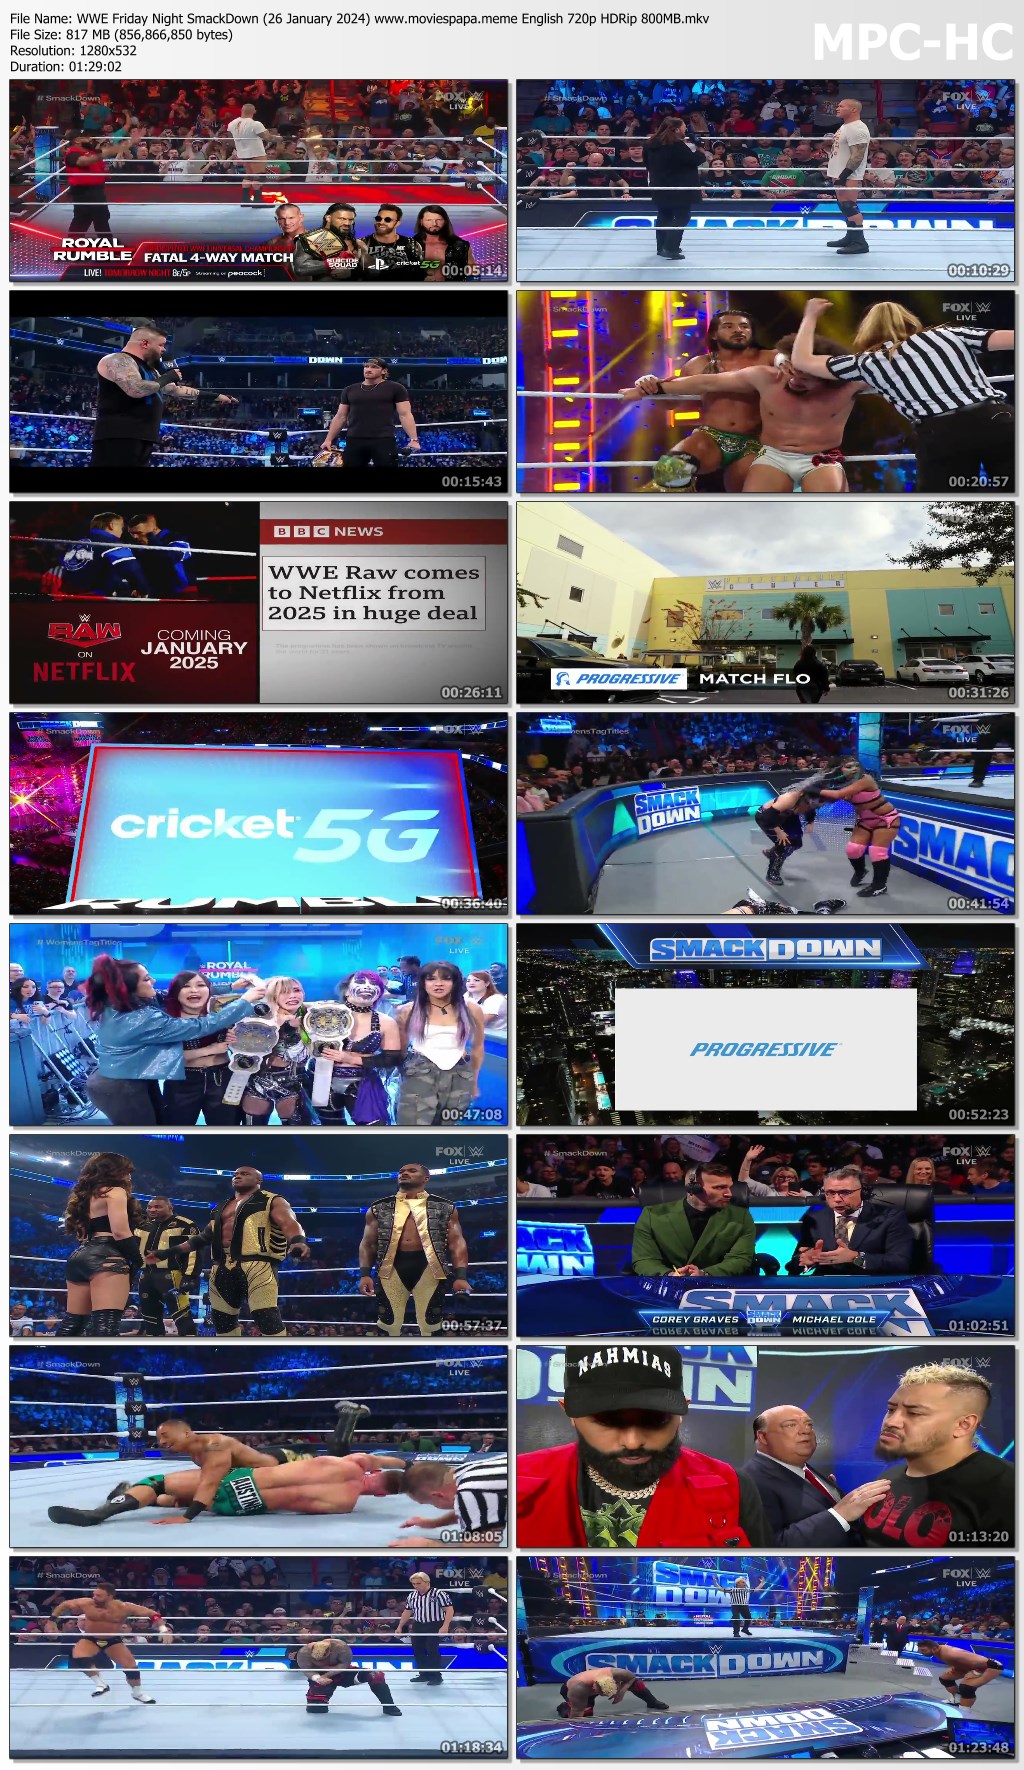 WWE Friday Night SmackDown 26 January 2024 www.moviespapa.meme English 720p HDRip 800MB.mkv thumbs